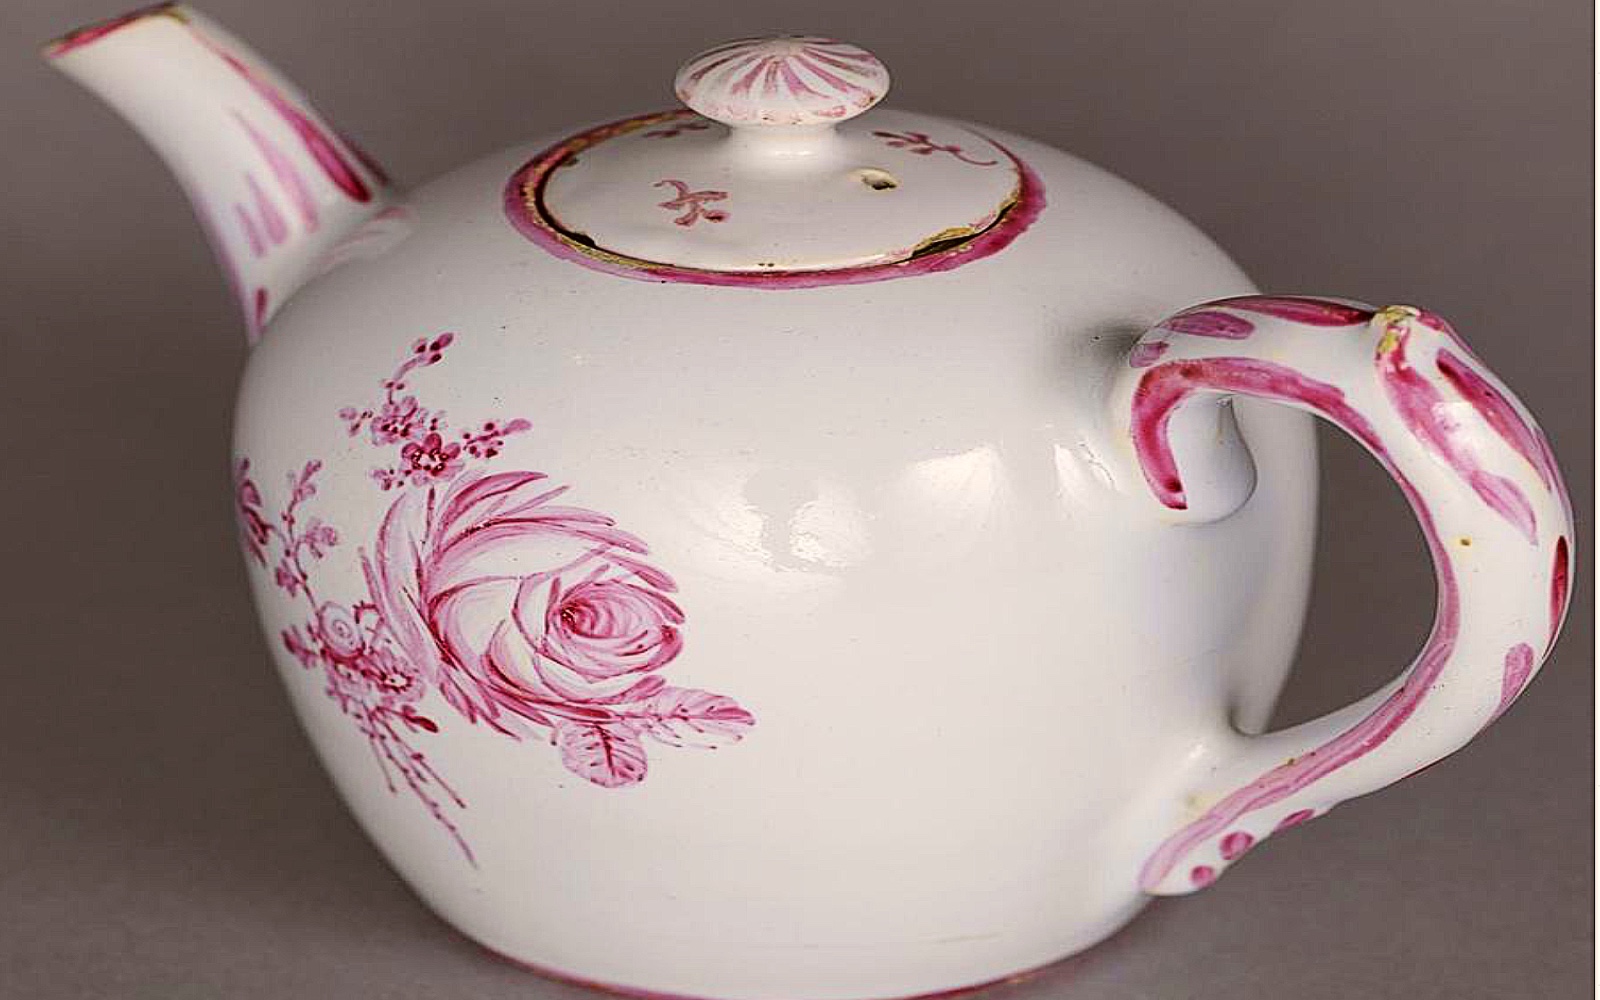 A teapot at the Koerner Ceramic Gallery